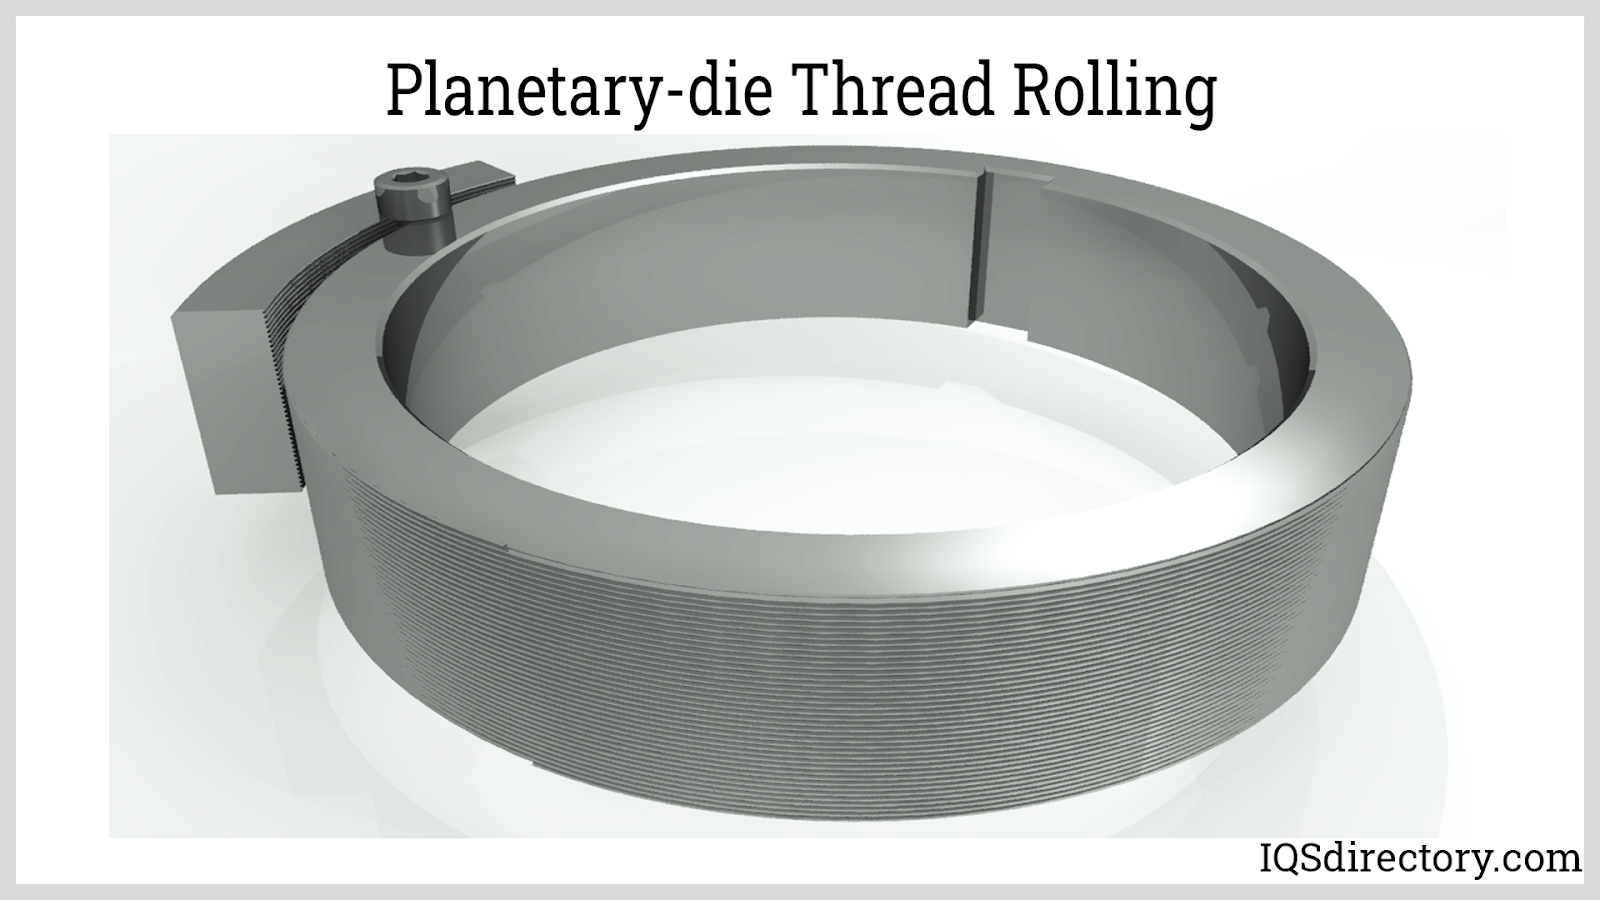 Planetary-die Thread Rolling